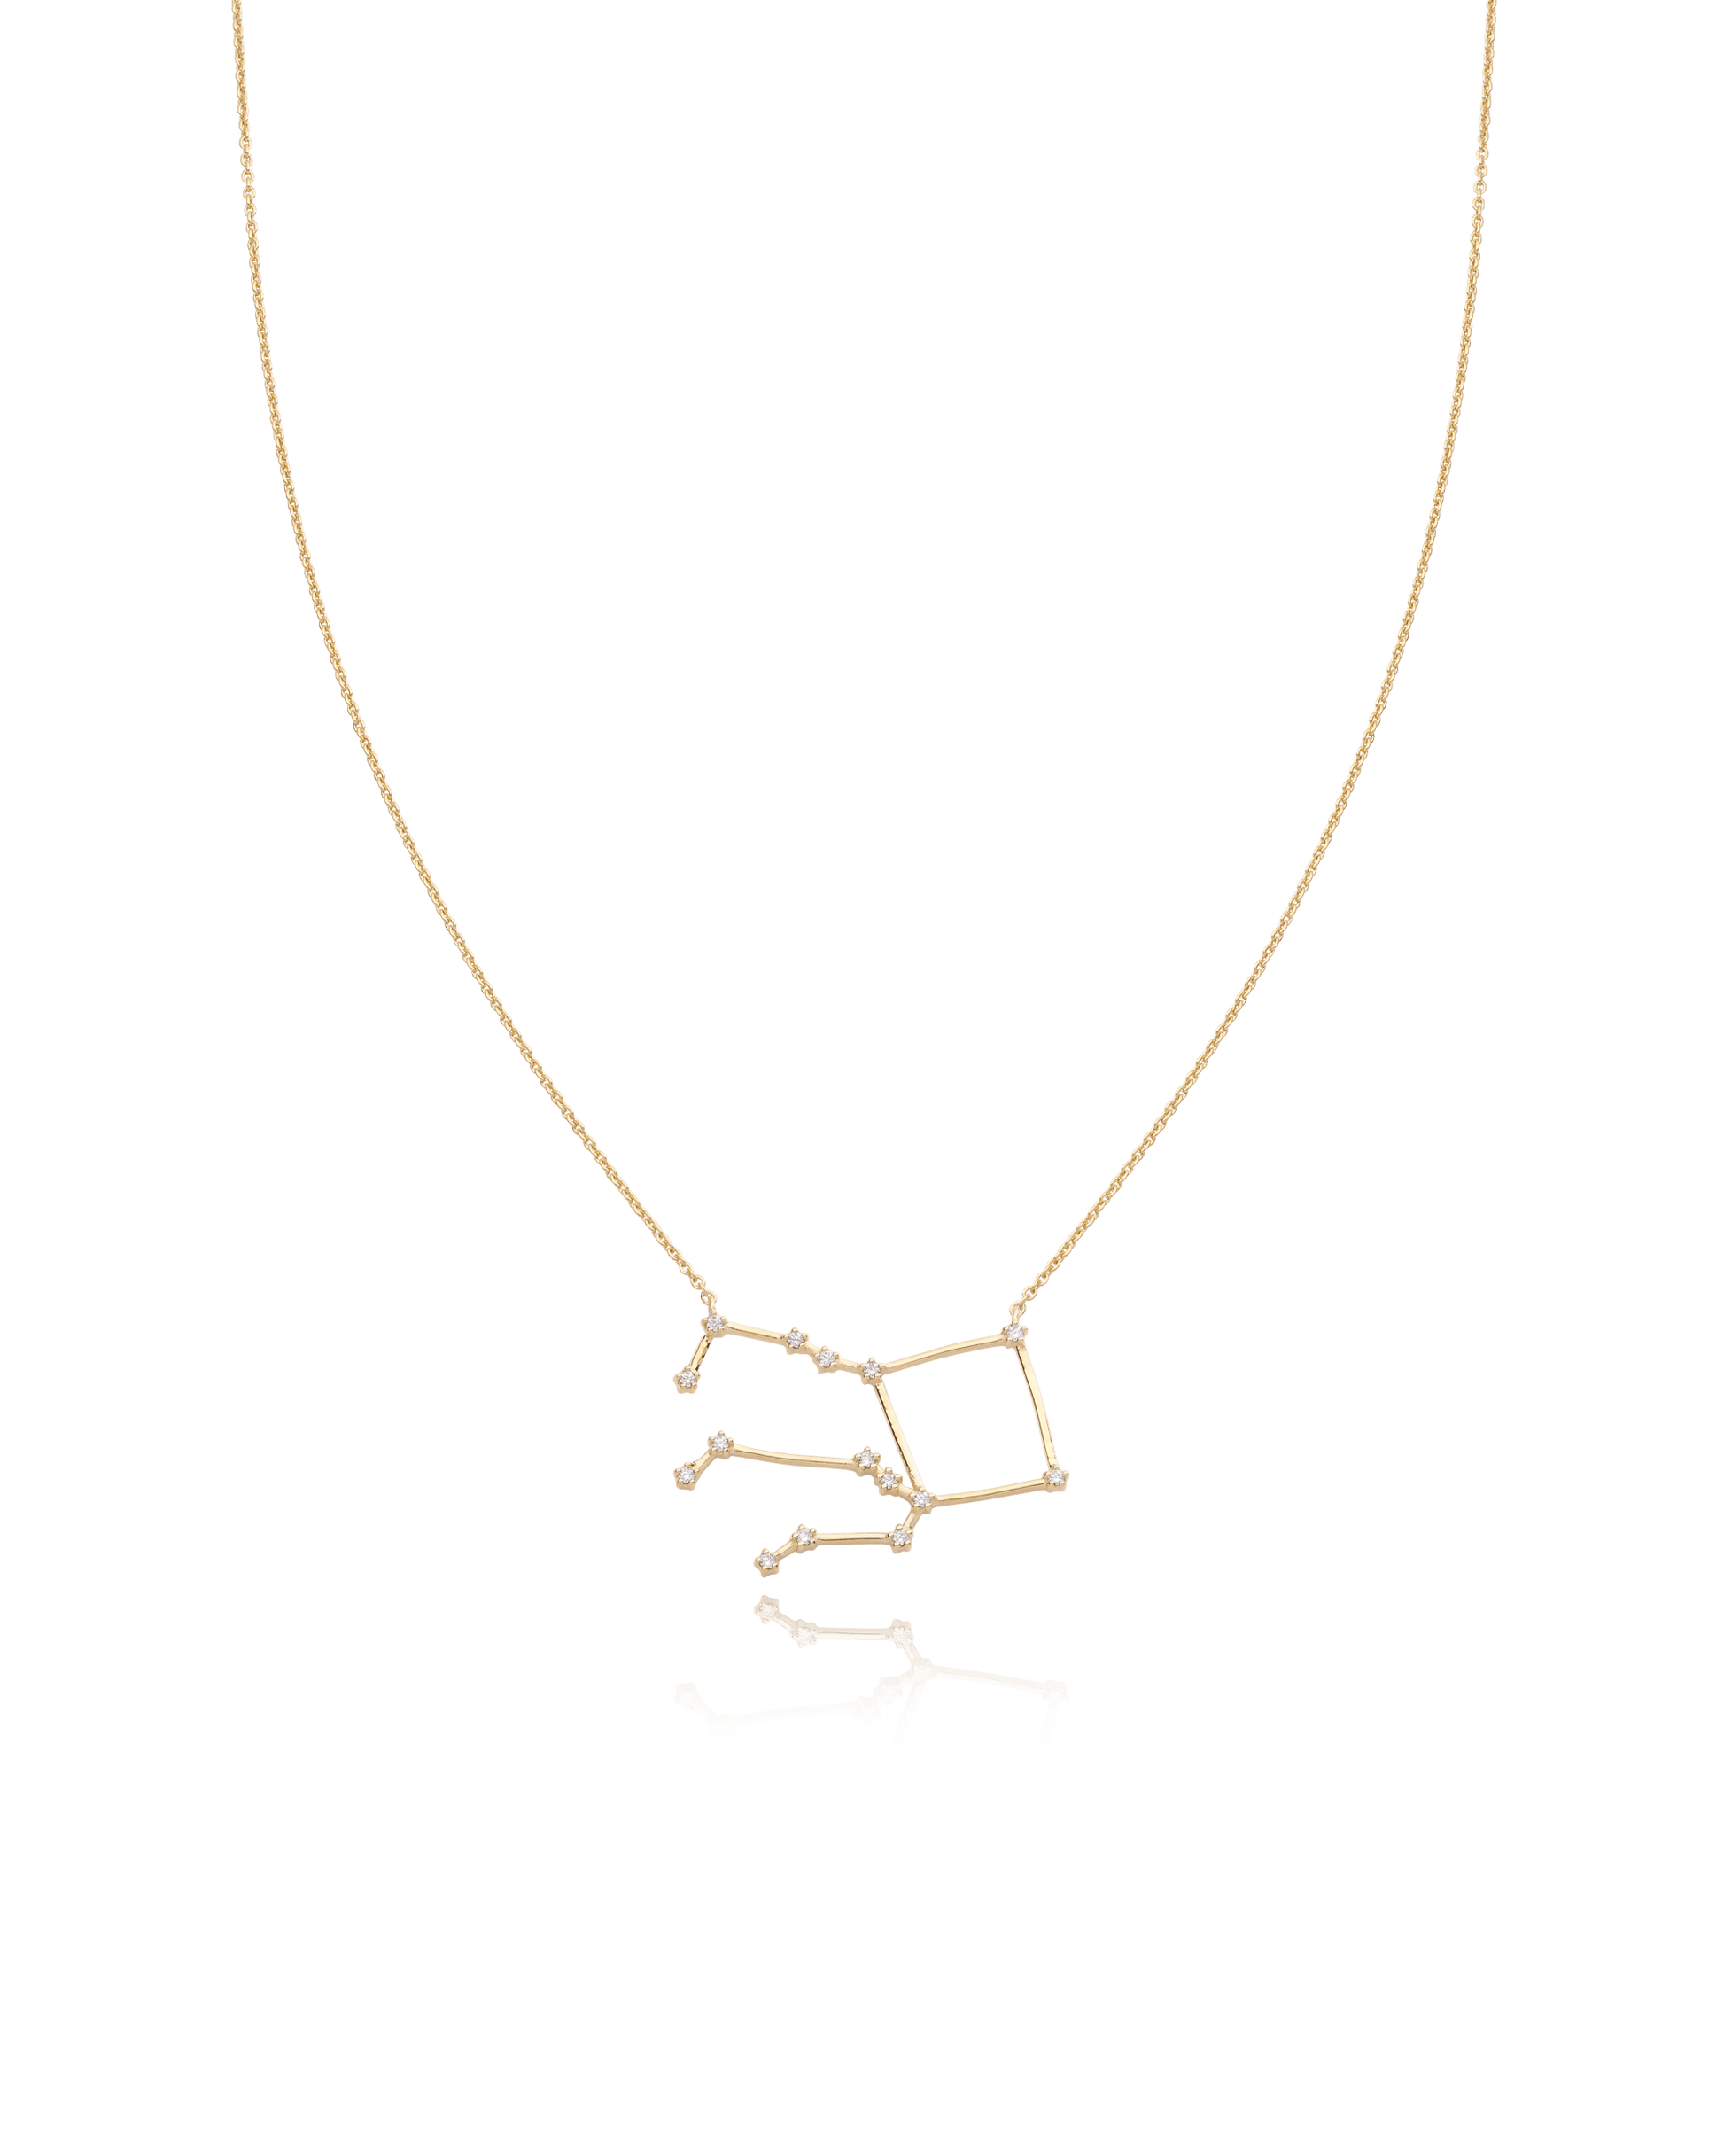 Ursa Major Constellation Necklace - 18K Gold Vermeil Necklaces magal-dev Pegasus 16" 